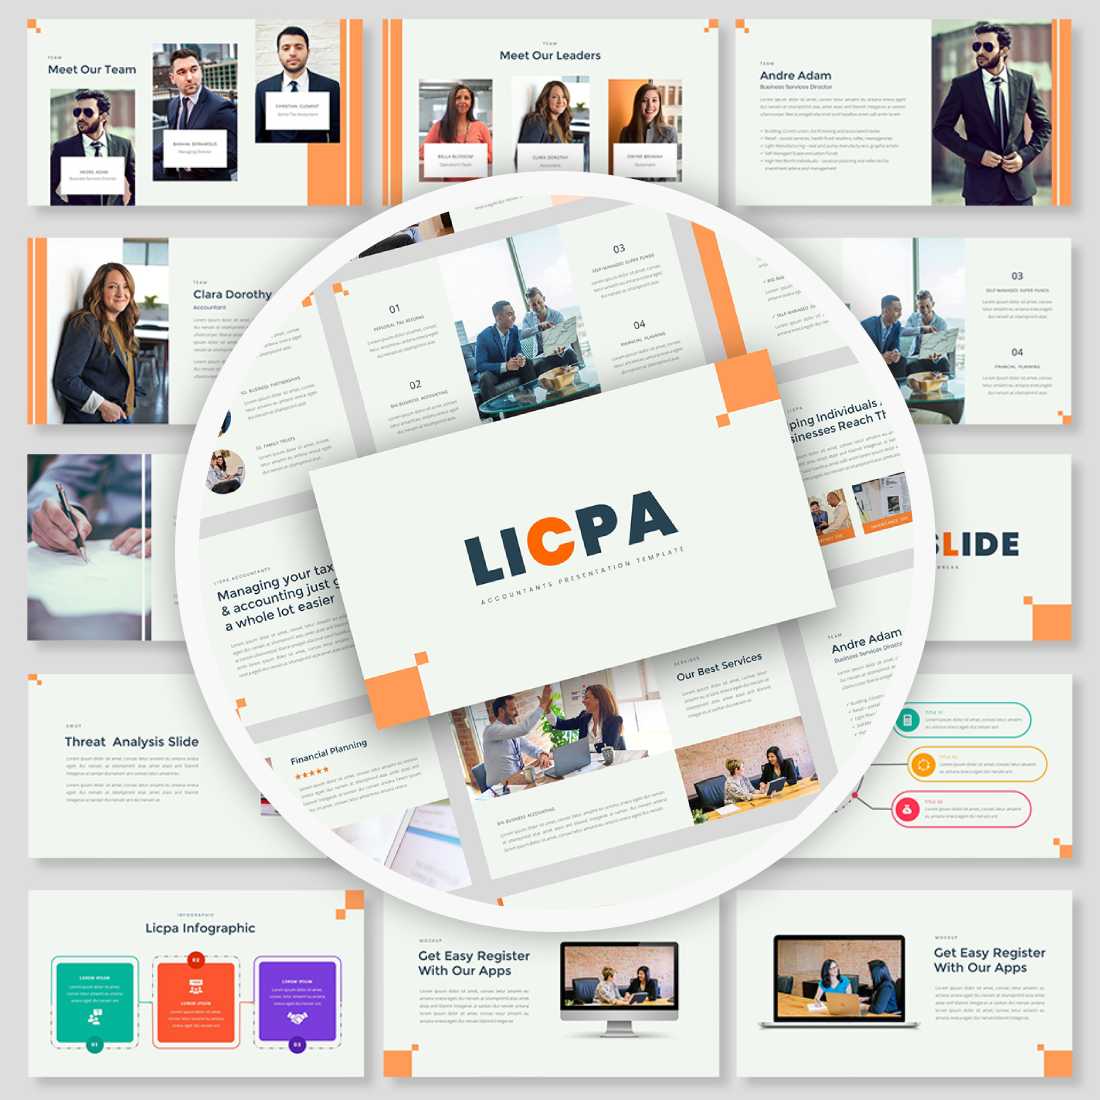 Licpa - Accountants Presentation Keynote Template cover image.